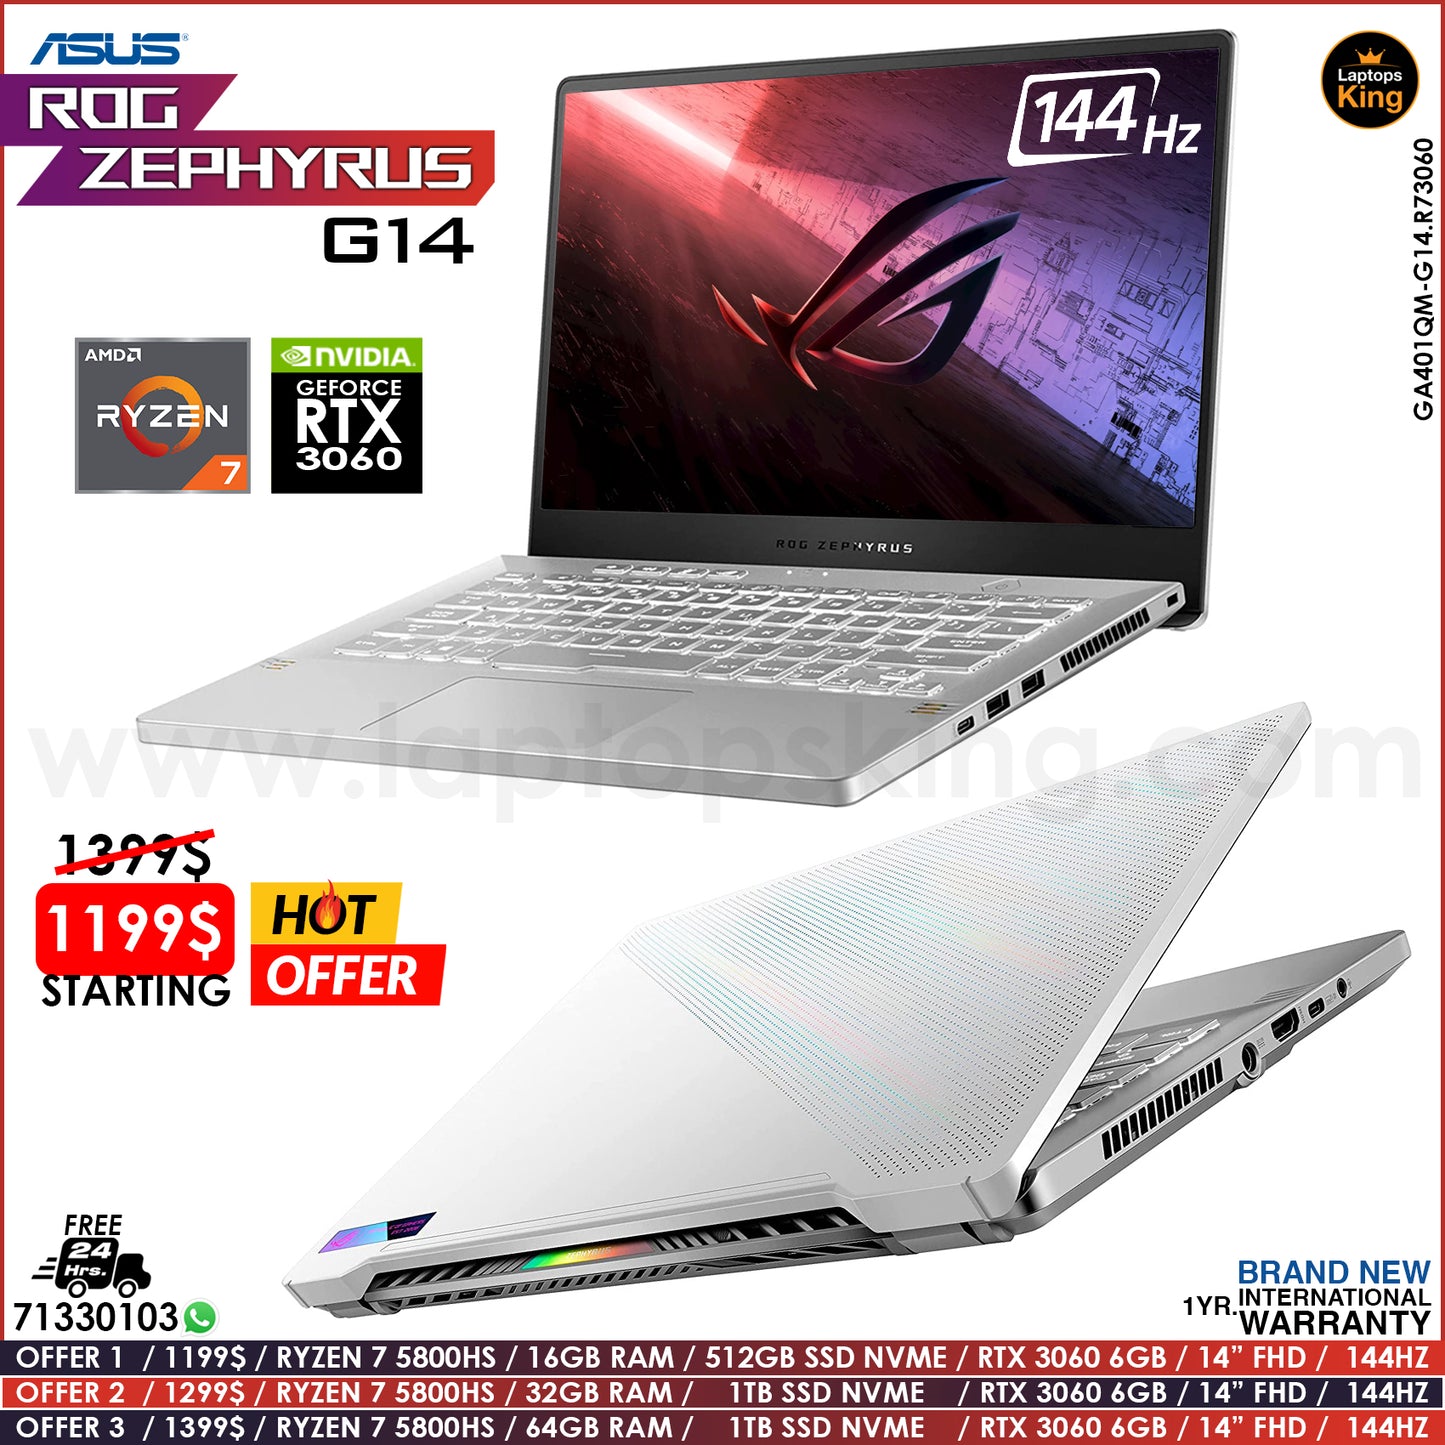 Asus Rog Zephyrus G14 GA401QM-G14.R73060 Ryzen 7 5800hs Rtx 3060 144hz Gaming Laptops (Brand New)